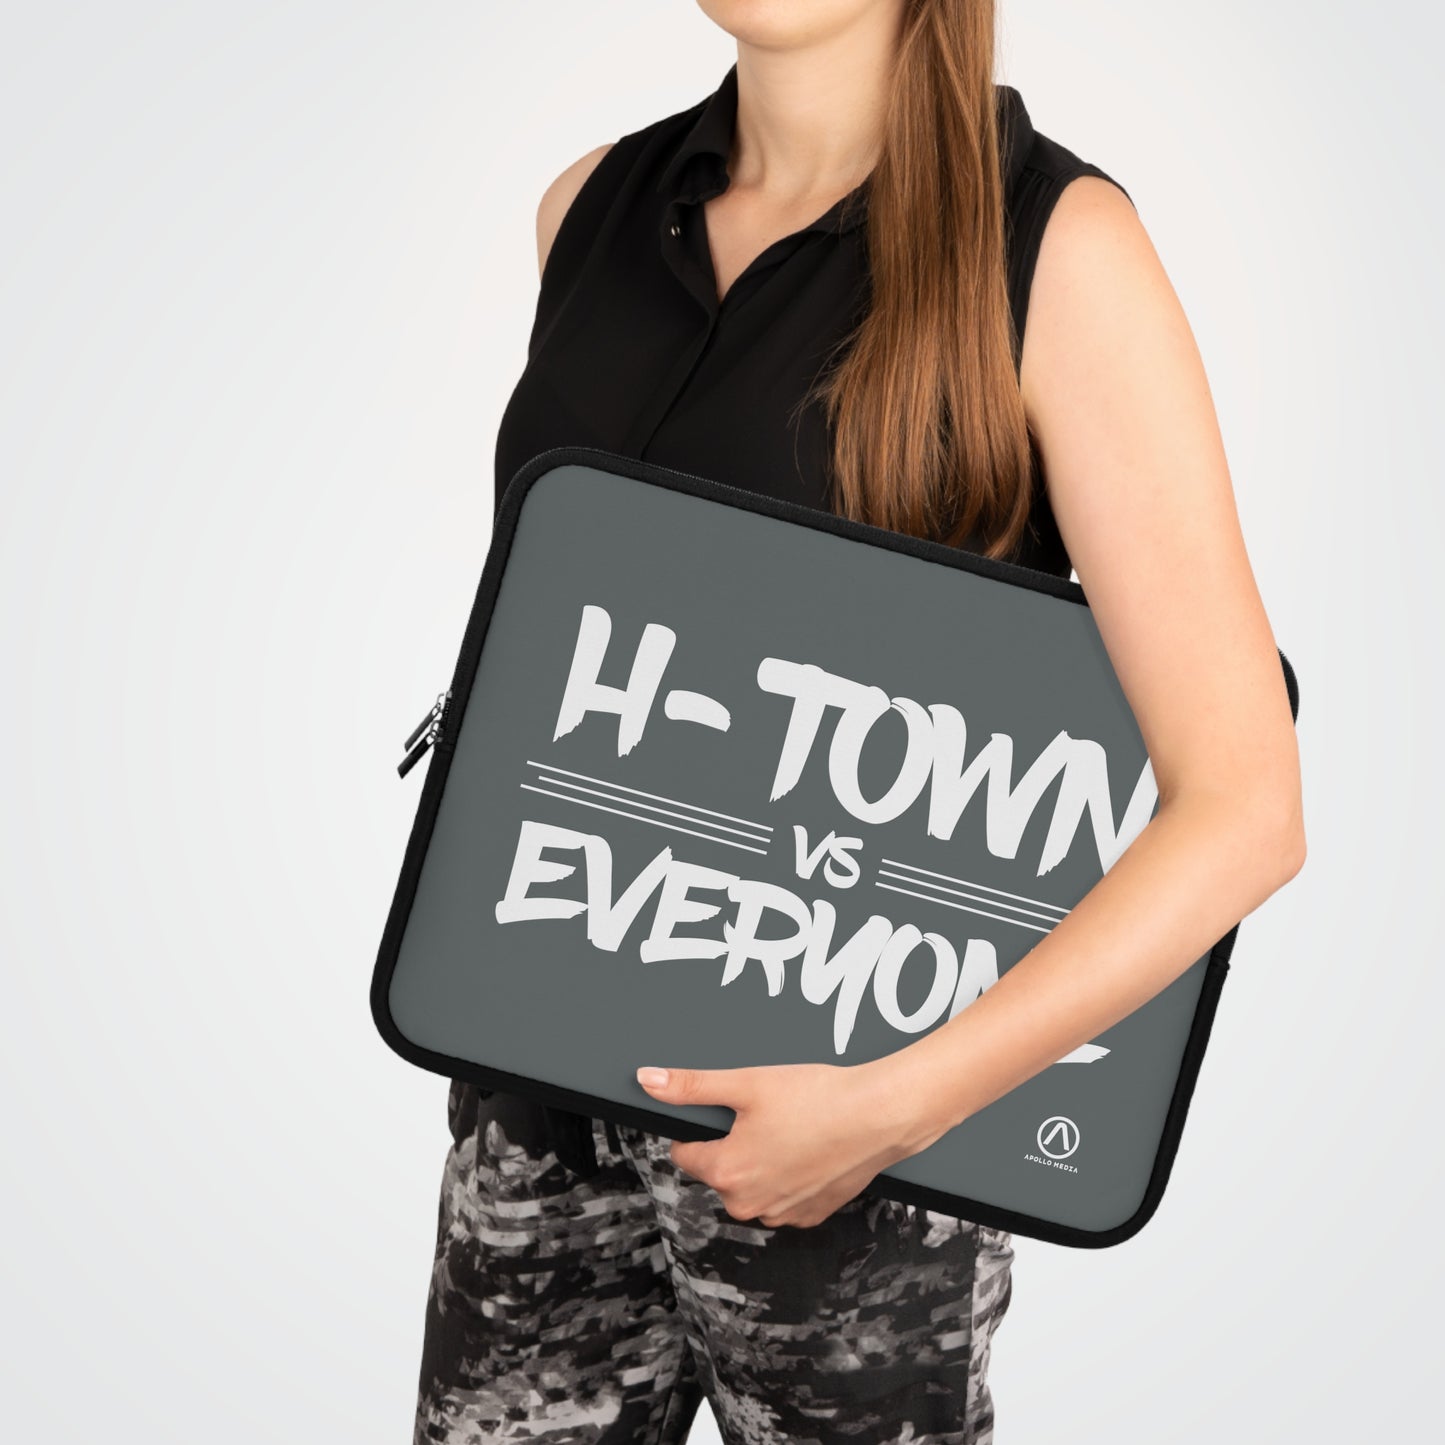 H-Town vs Everyone Laptop Sleeve